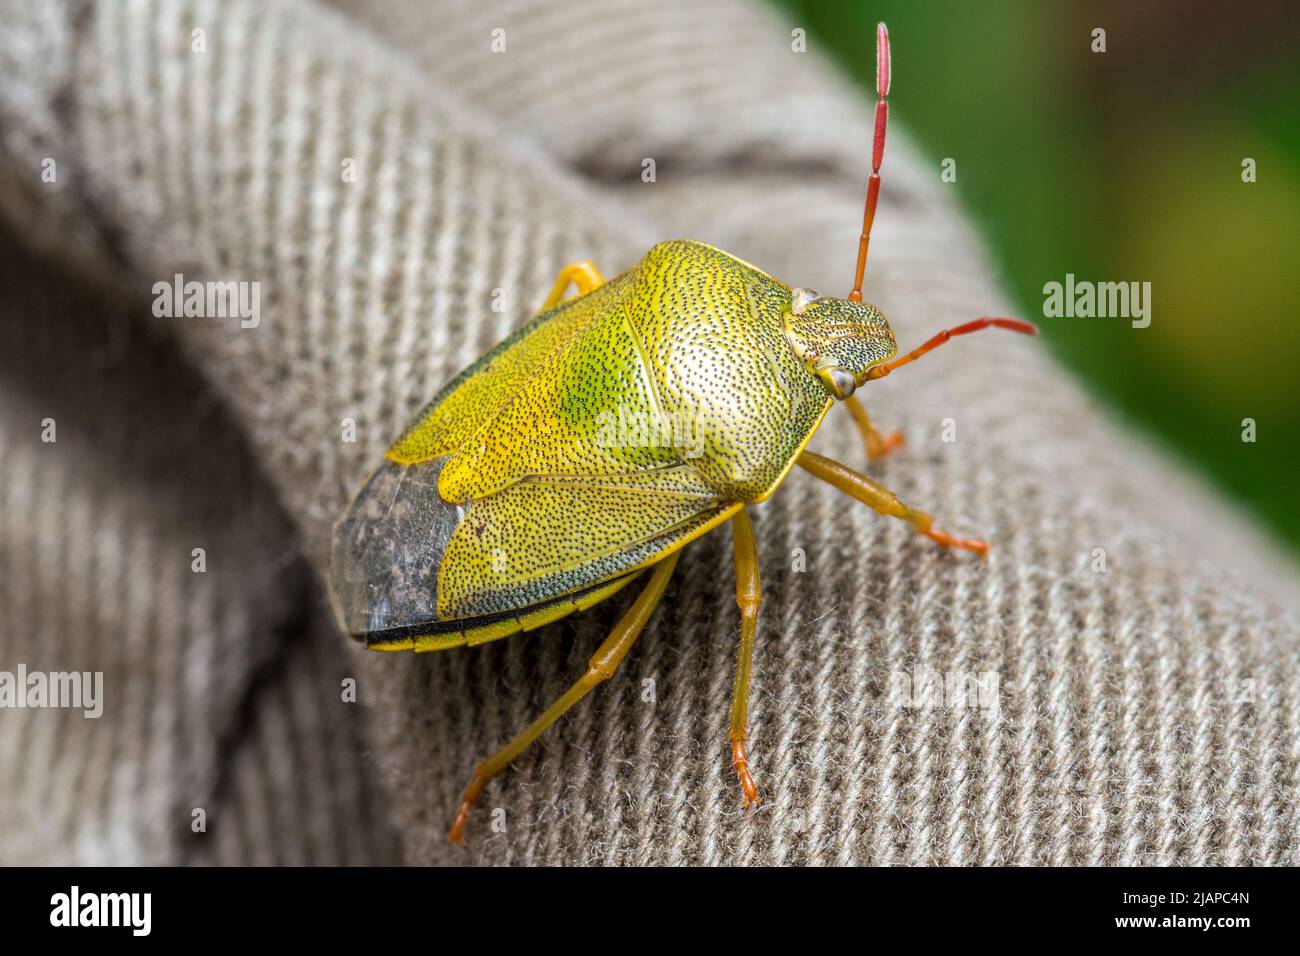 A gorse shield bug (Piezodorus lituratus) resting on the photographer's leg. Taken near Nose's Point, Seaham, UK. Stock Photo